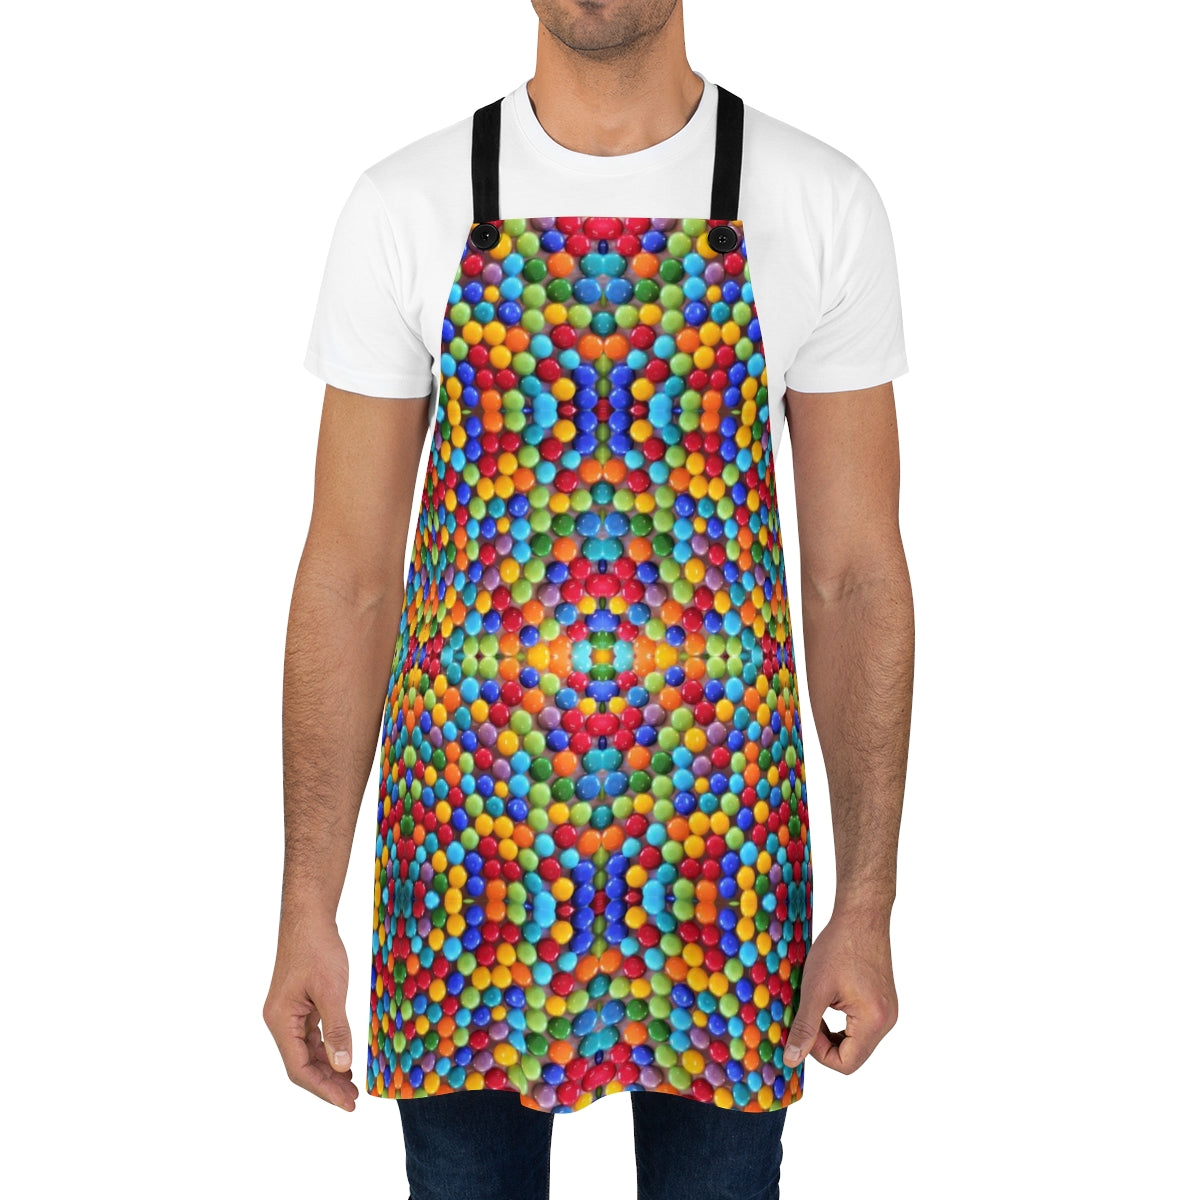 designer rainbow gumball skittles apron